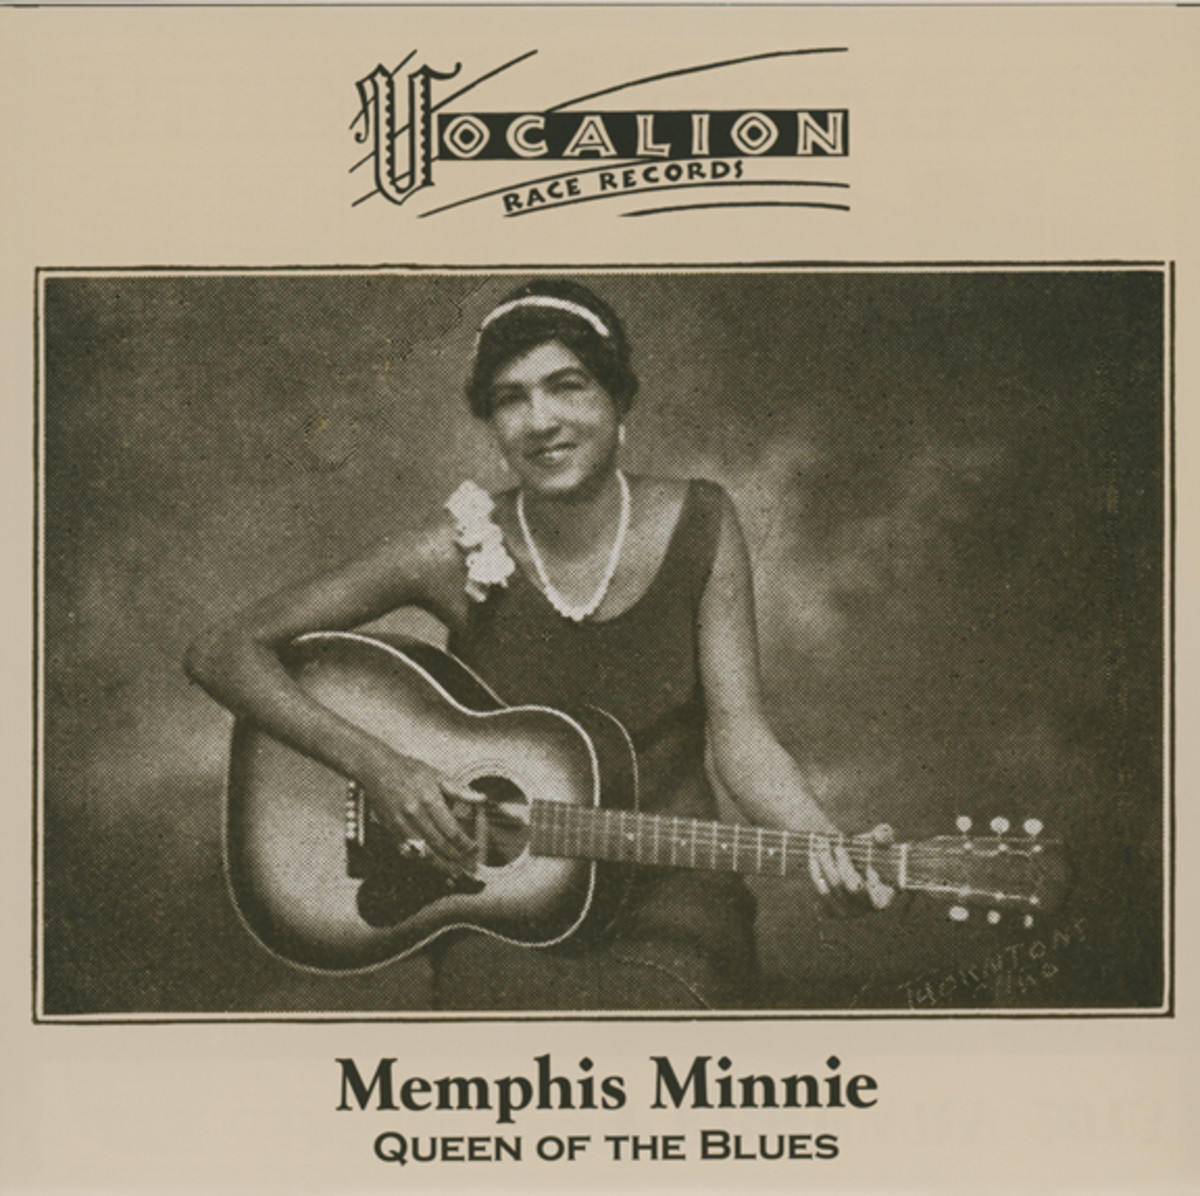 Memphis Minnie Vocalion ad courtesy Tefteller's World's Rarest Records